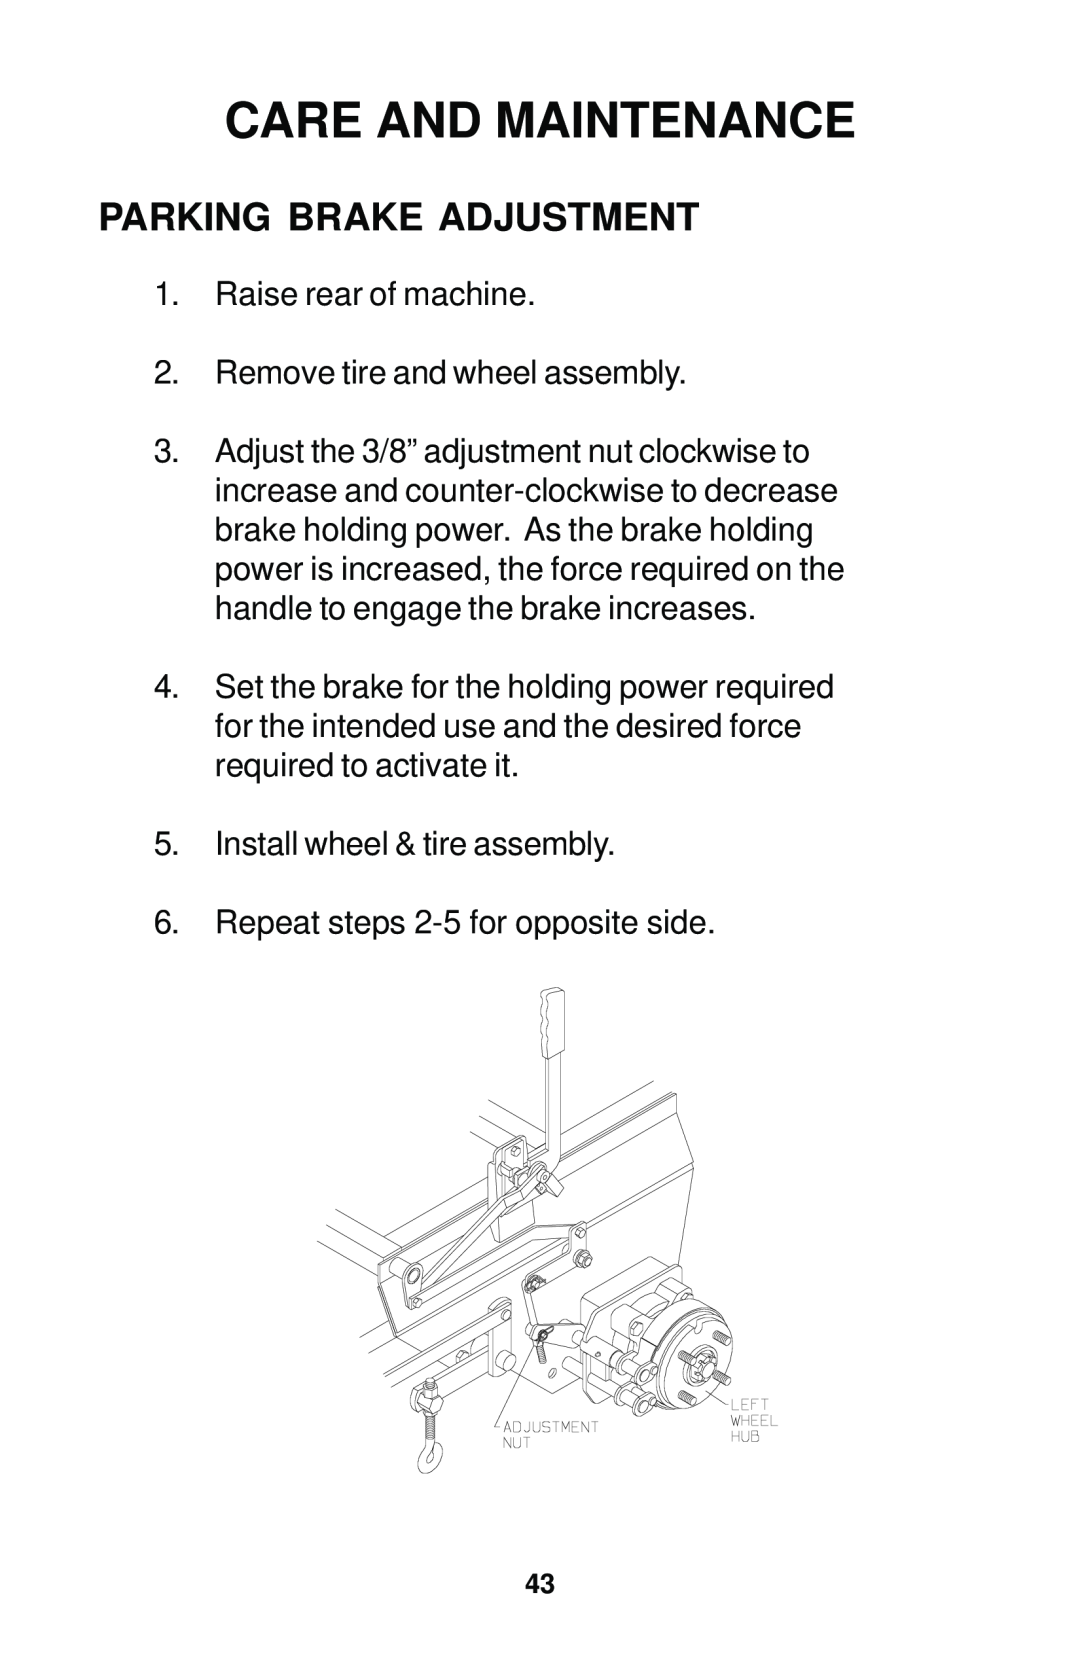 Dixon 12881-1104 manual Parking Brake Adjustment, Care And Maintenance 